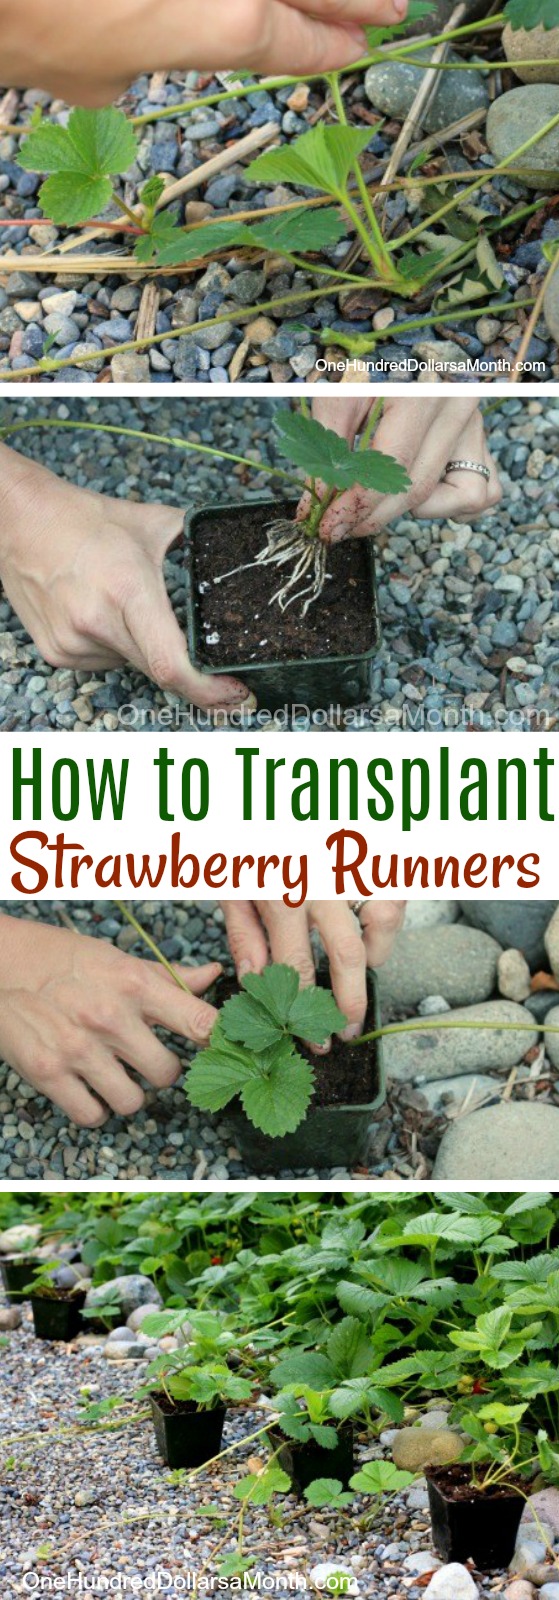 Transplanting Strawberry Runners